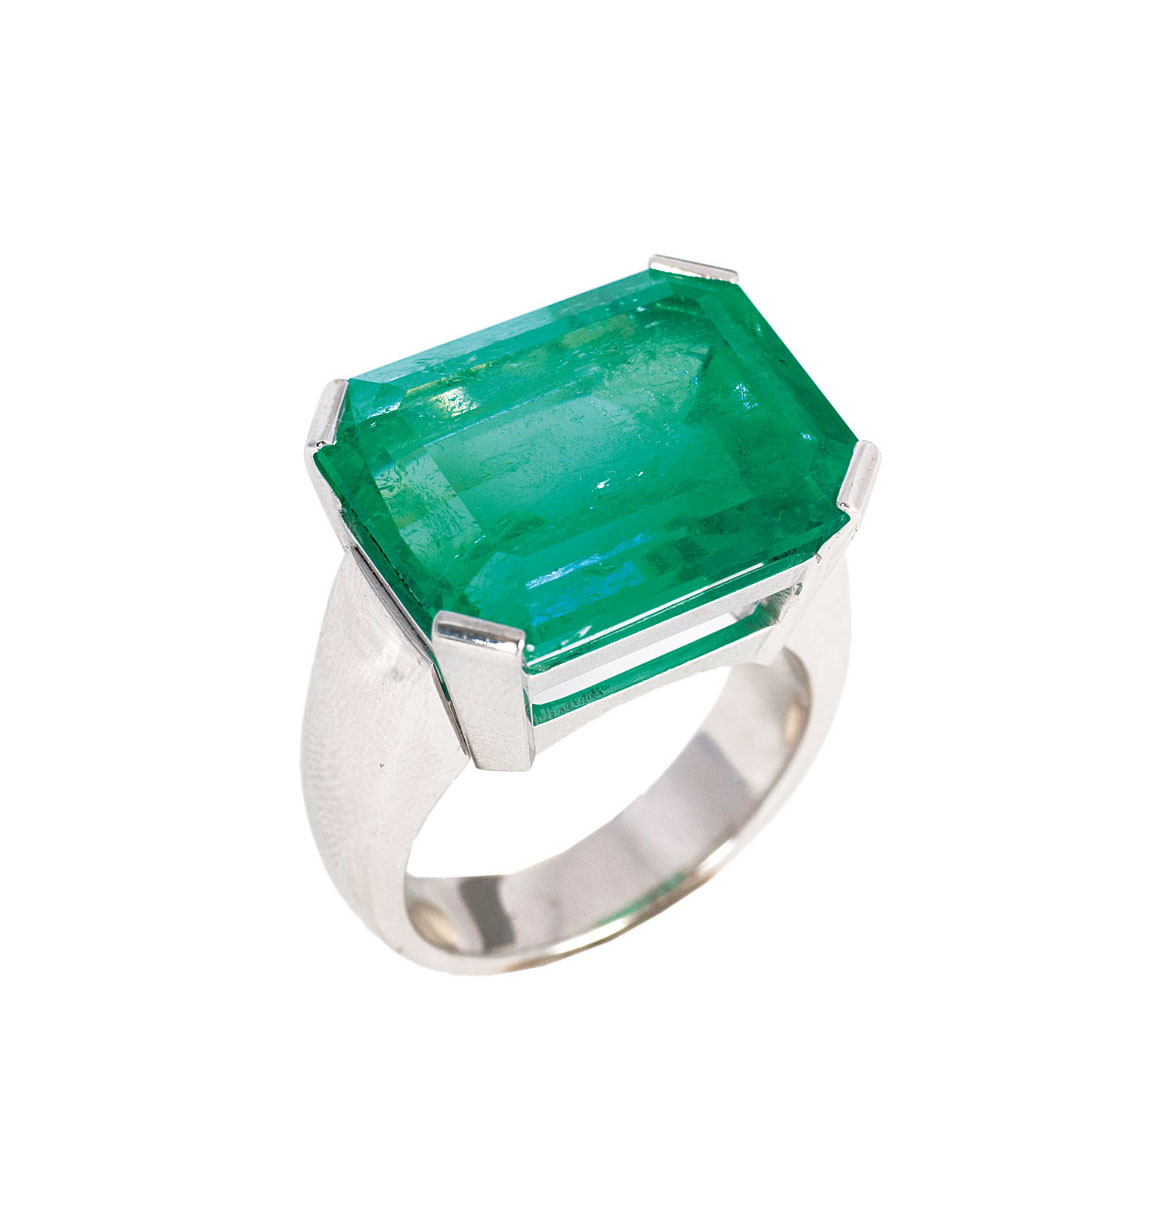 A highcarat emerald ring